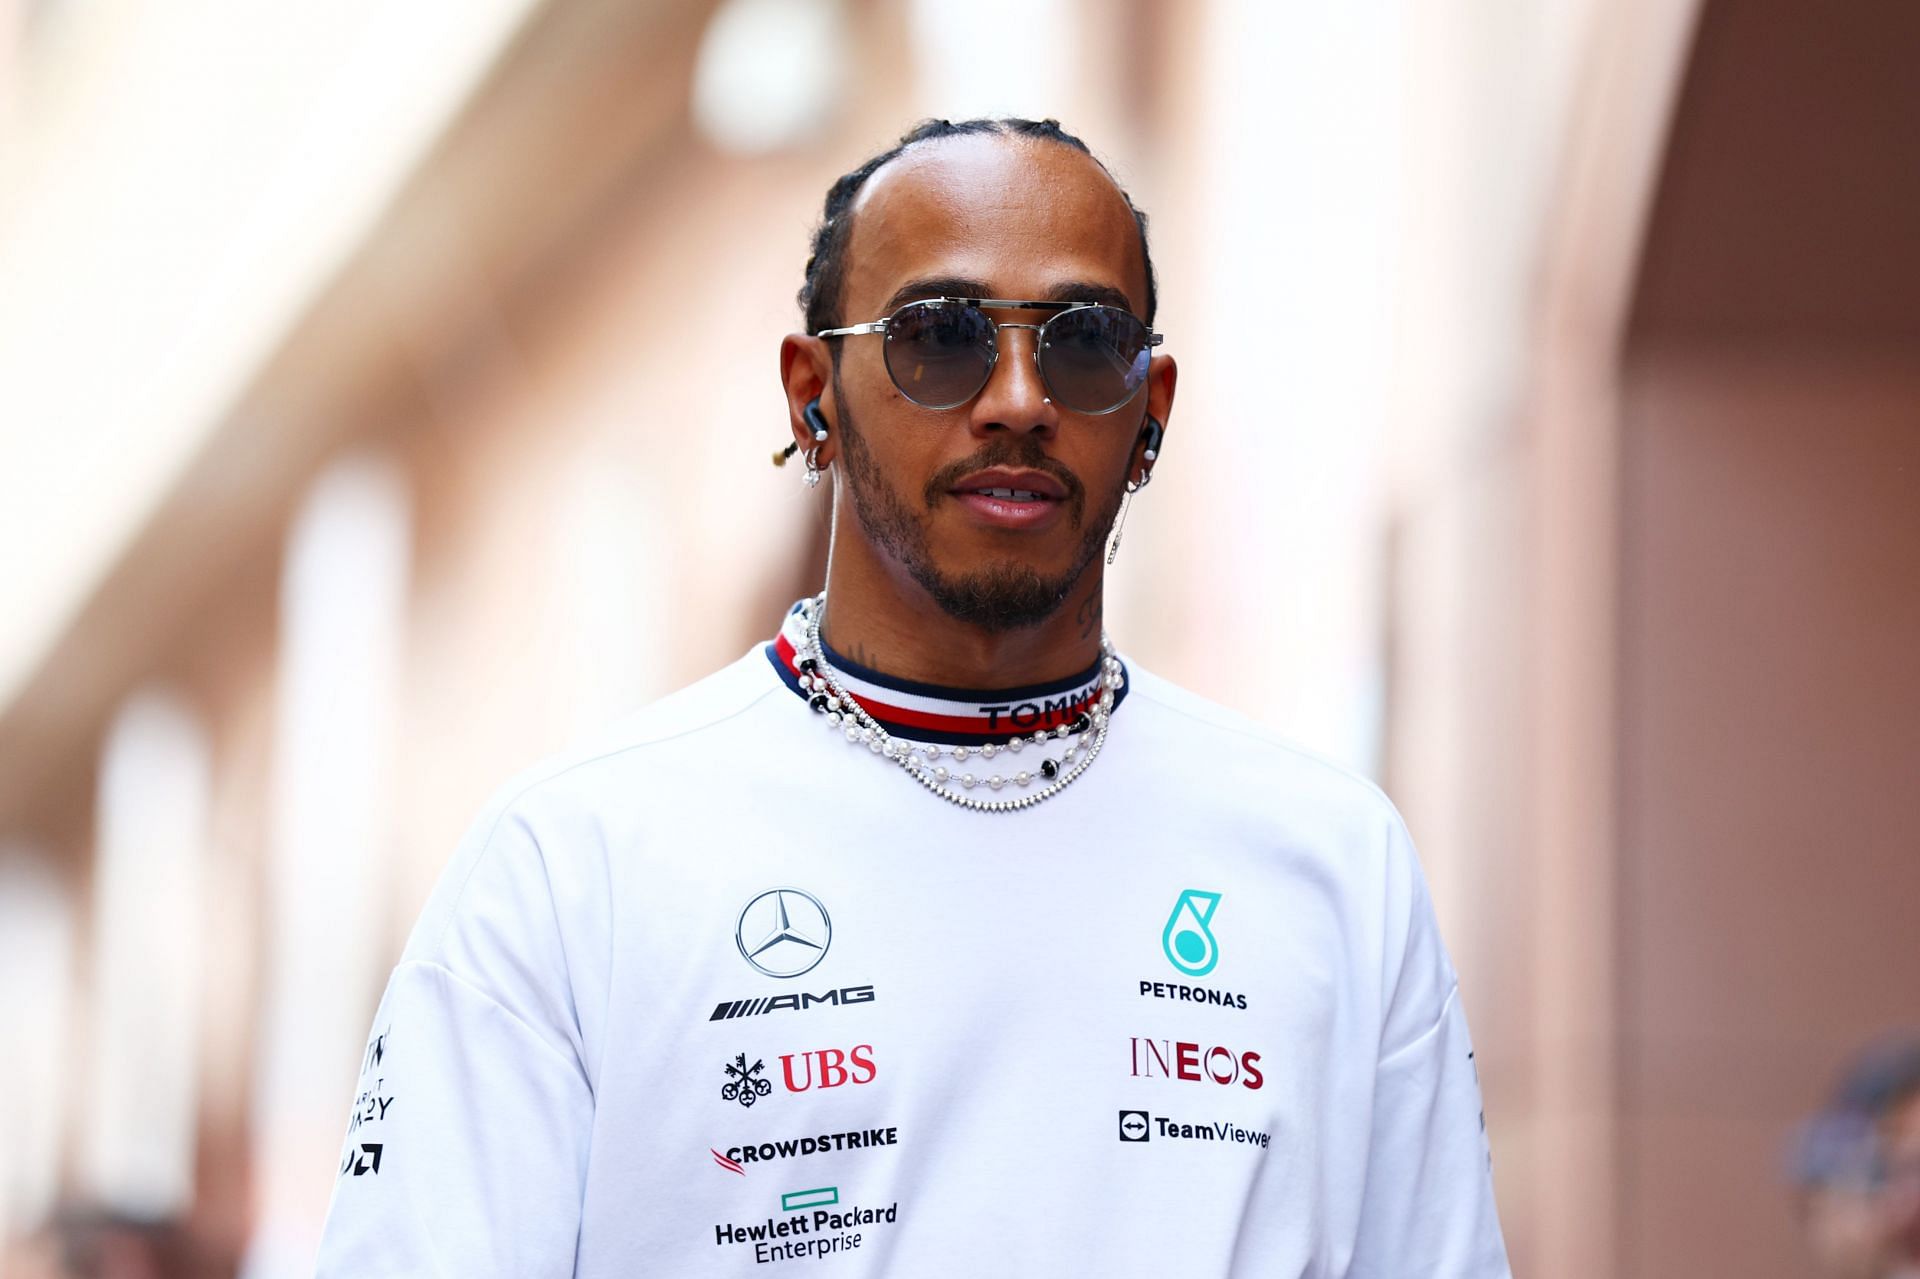 F1 Grand Prix of Monaco - Lewis Hamilton at the paddock